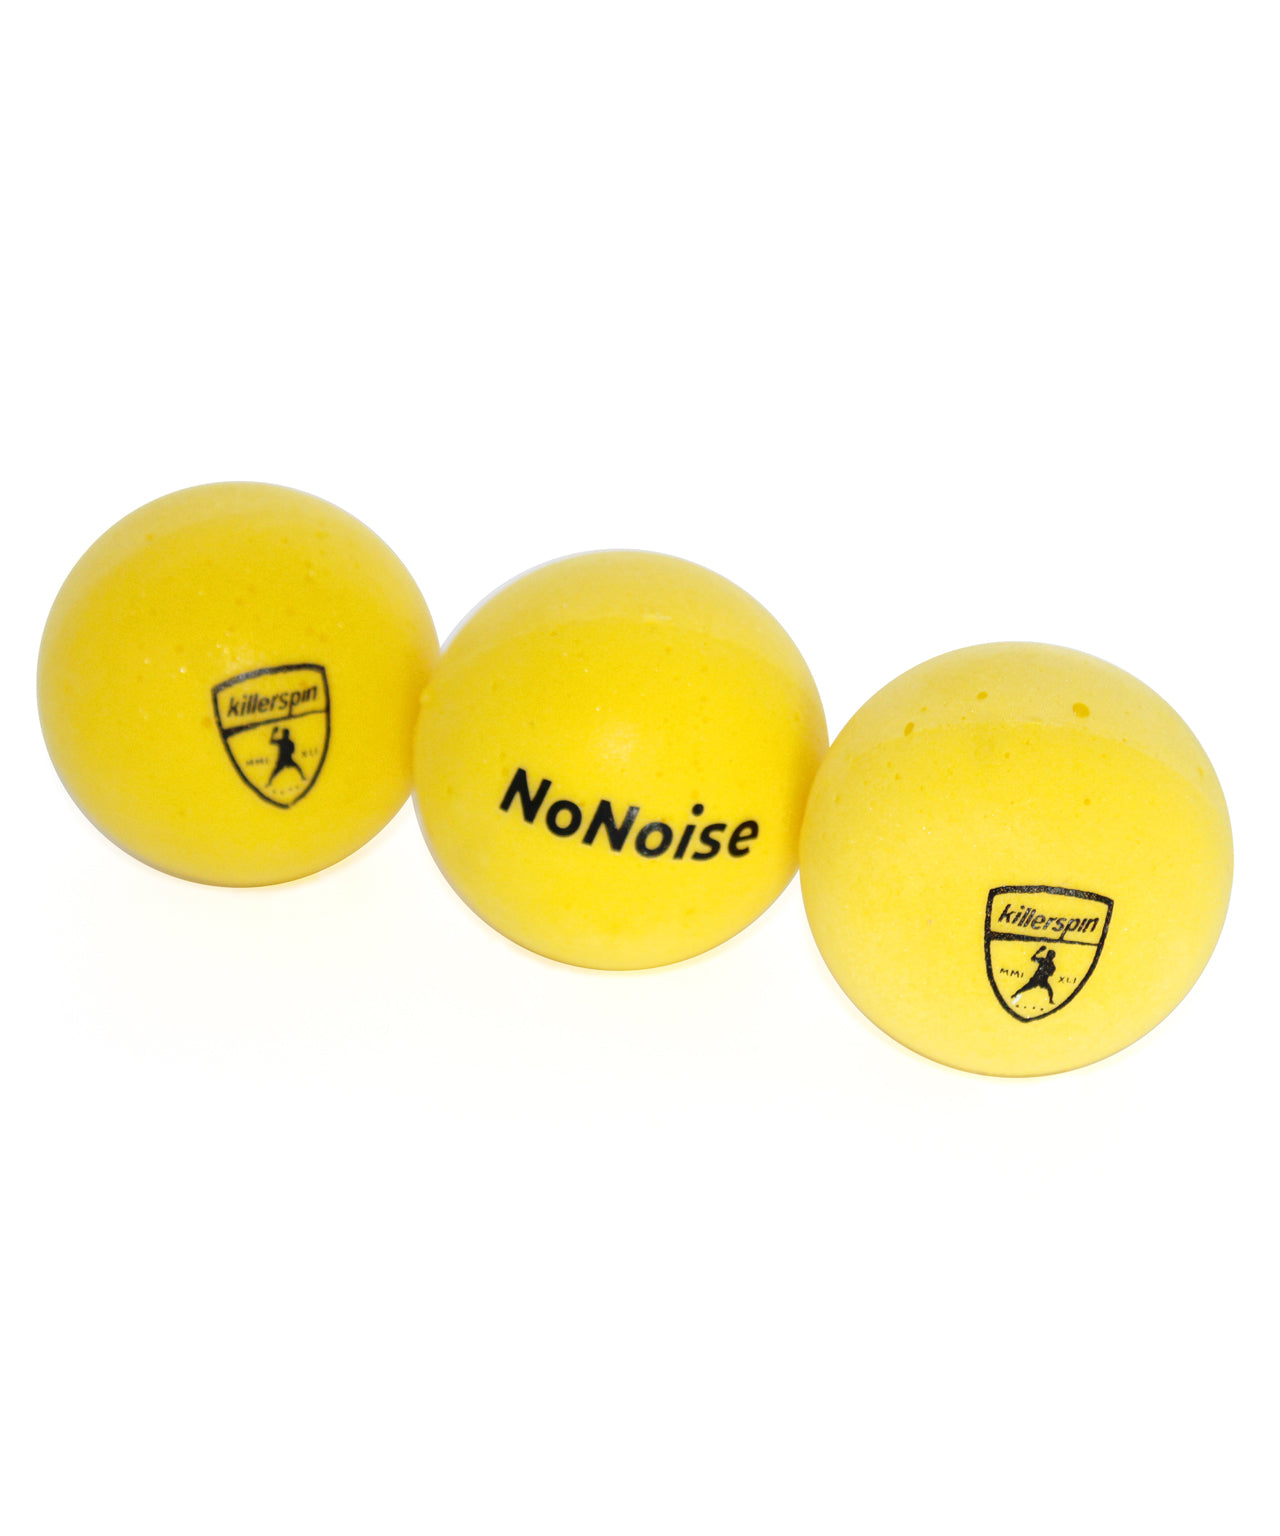 Killerspin No Noise Table Tennis Rubber Balls - Multiple Balls